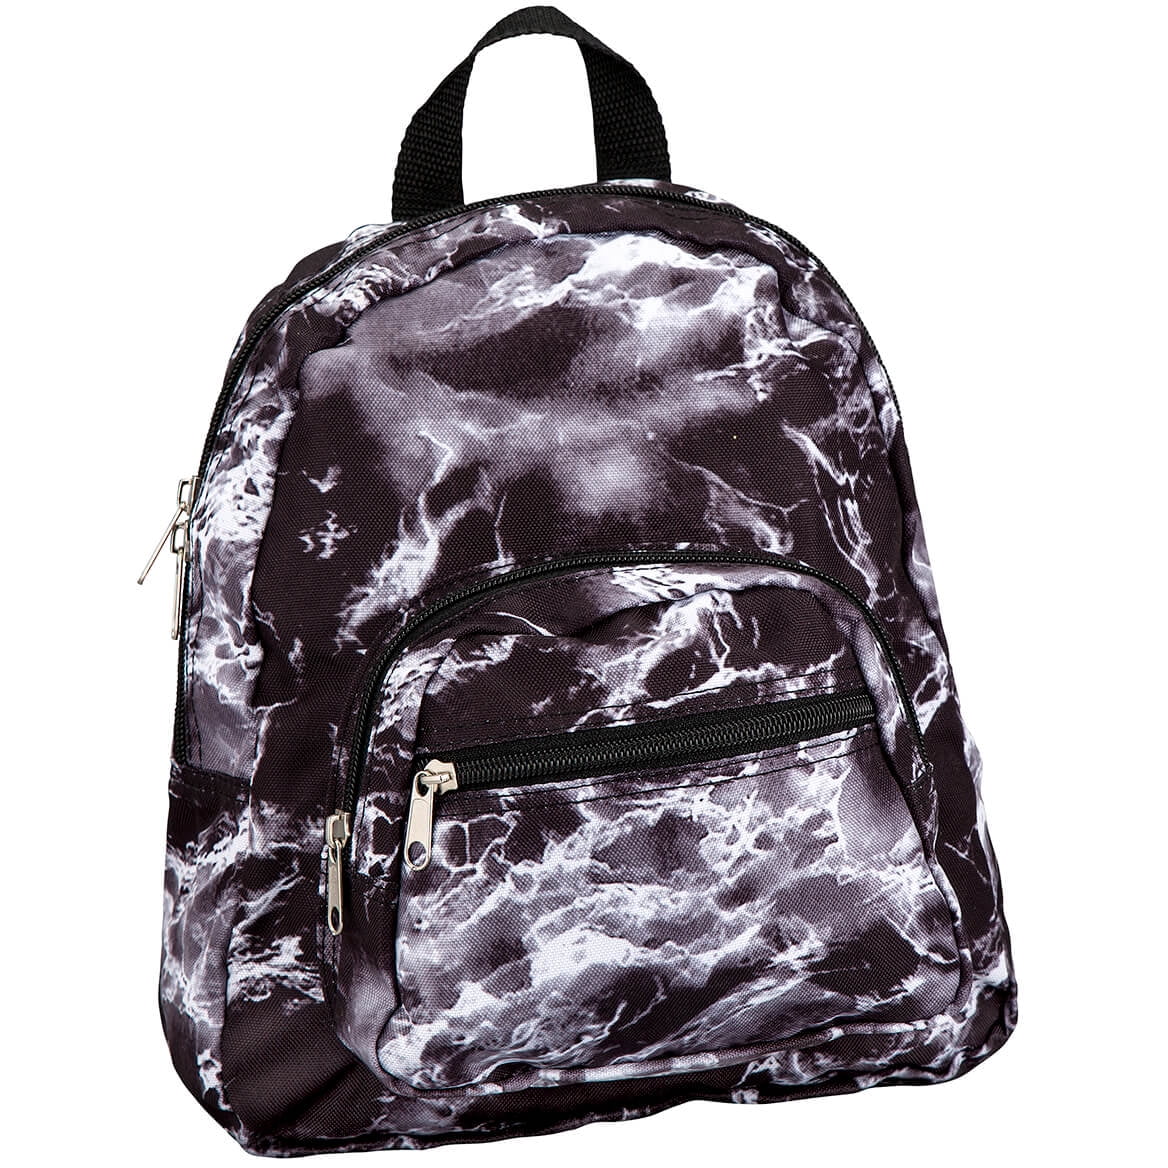 Marbled Galaxy Print Women Backpack School Bag Shoulder Bag Female Bagpack Laptop Back Packs Leather School Bagsl